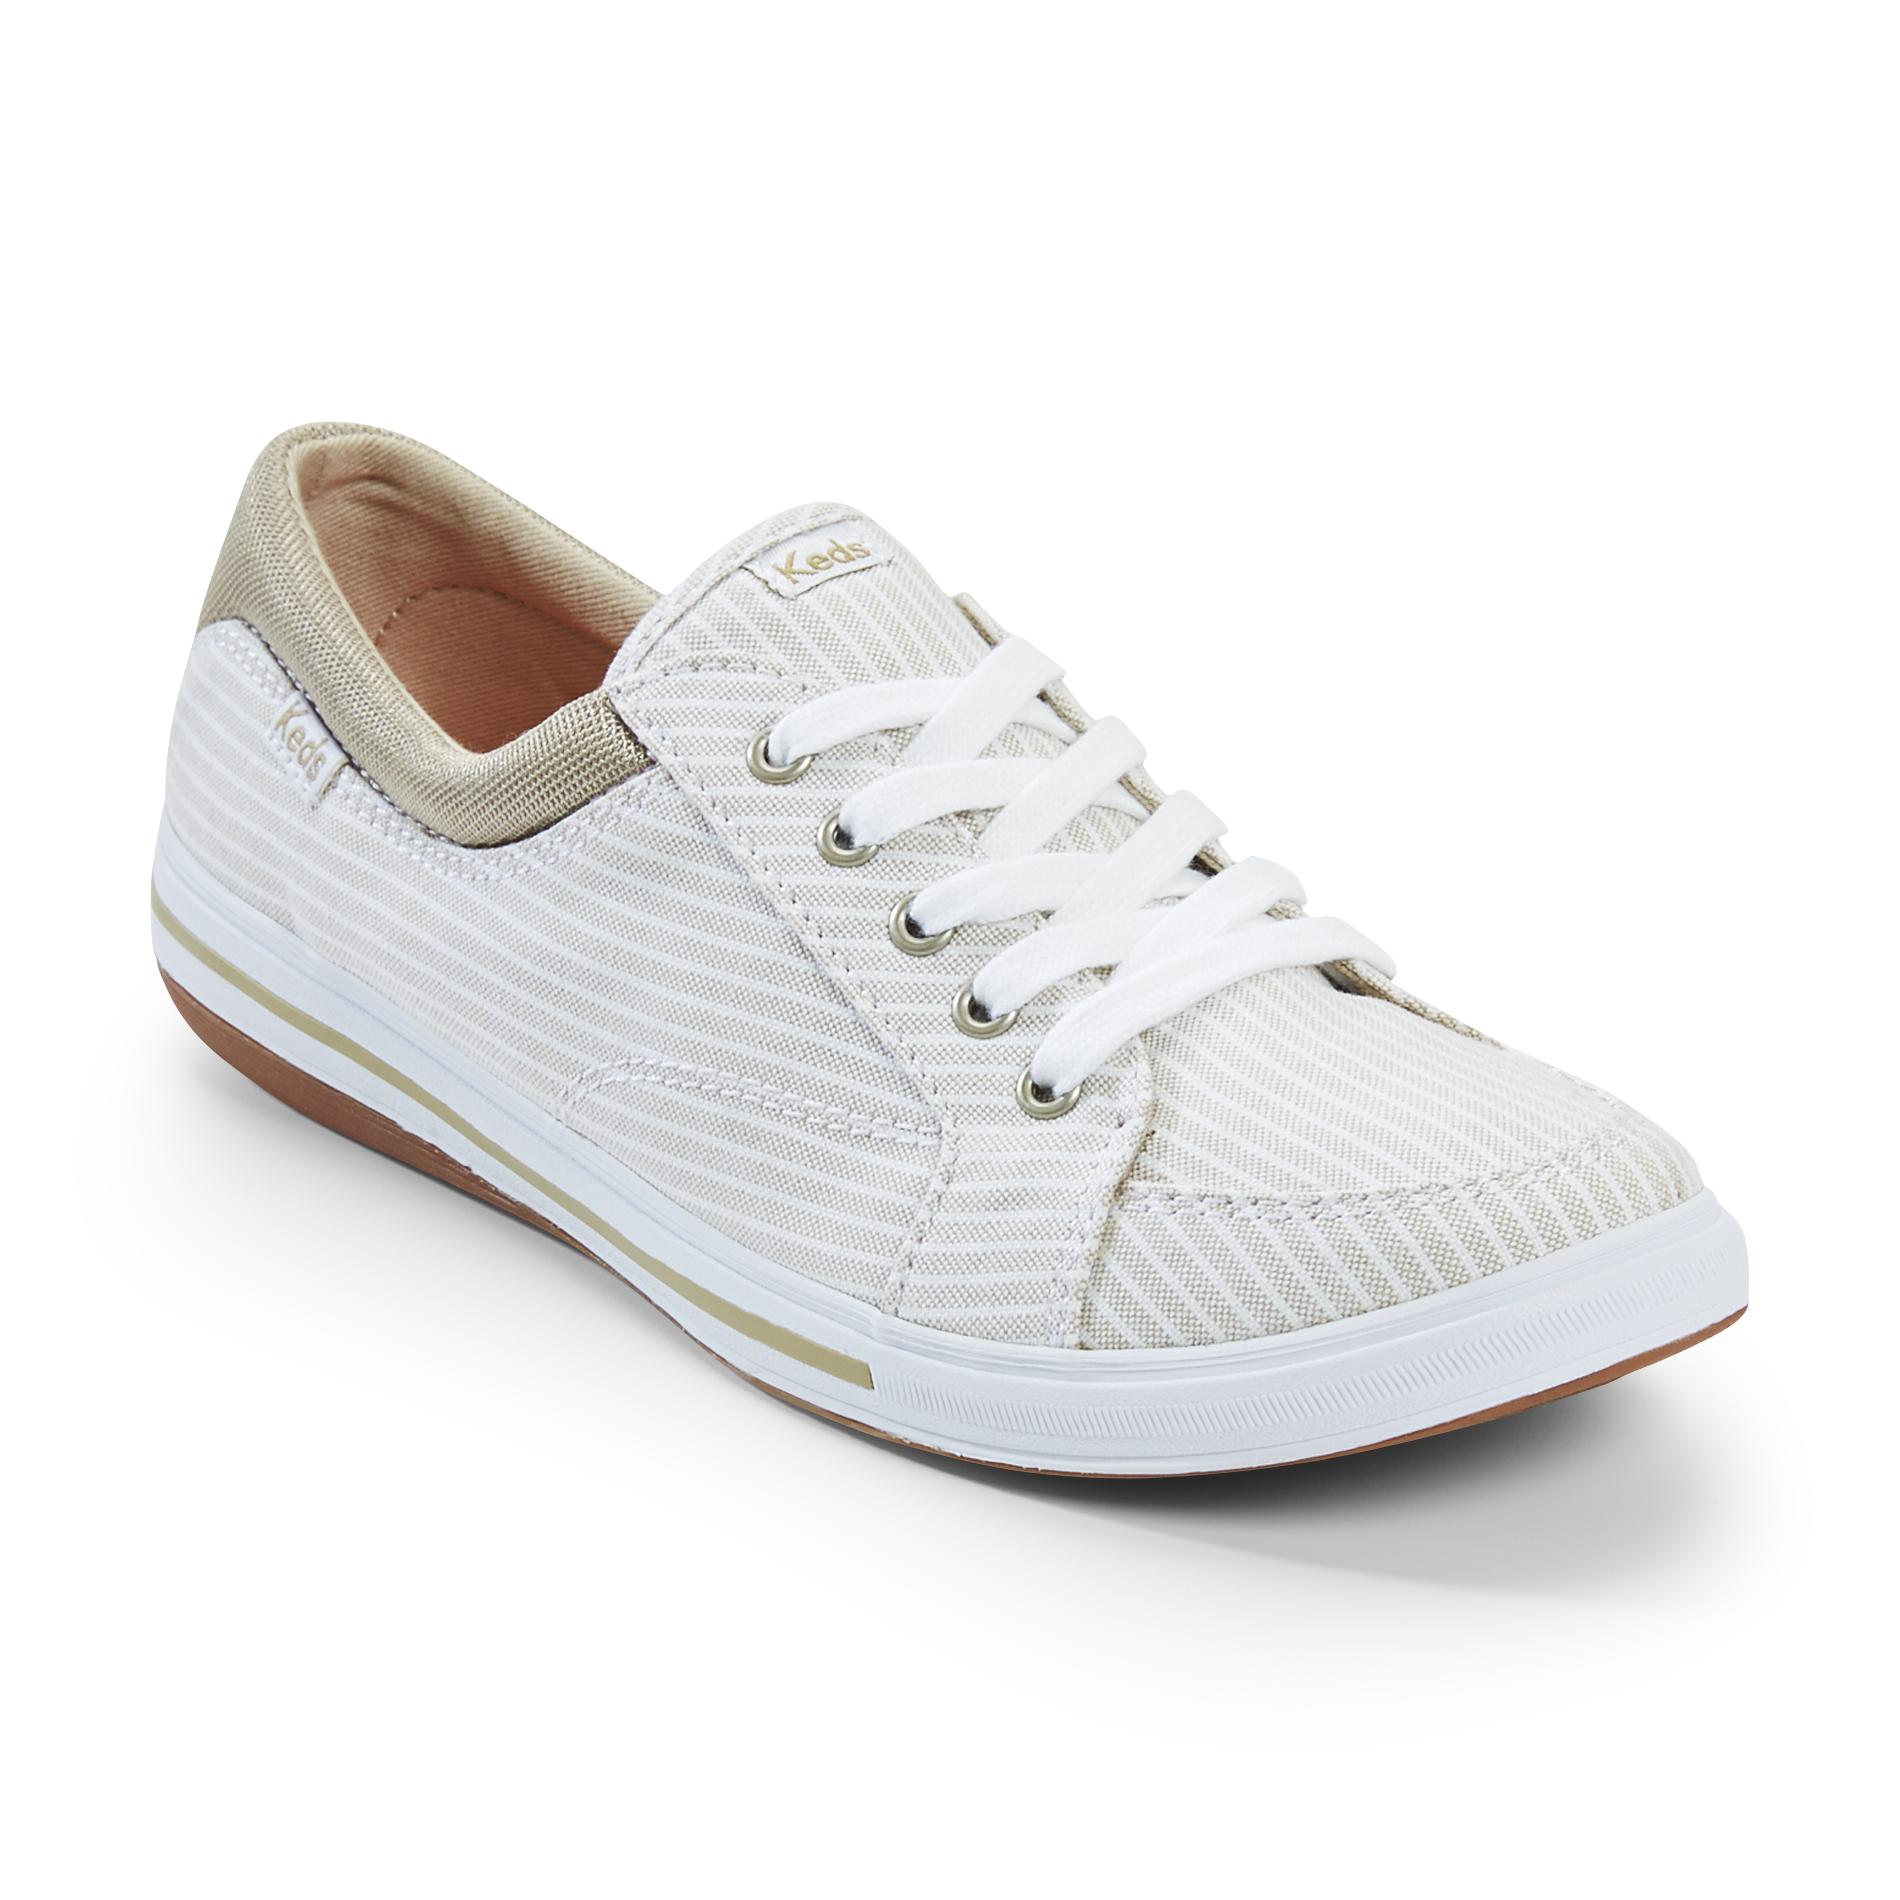 Keds Women's Vollie Athletic Shoe - Tan/White